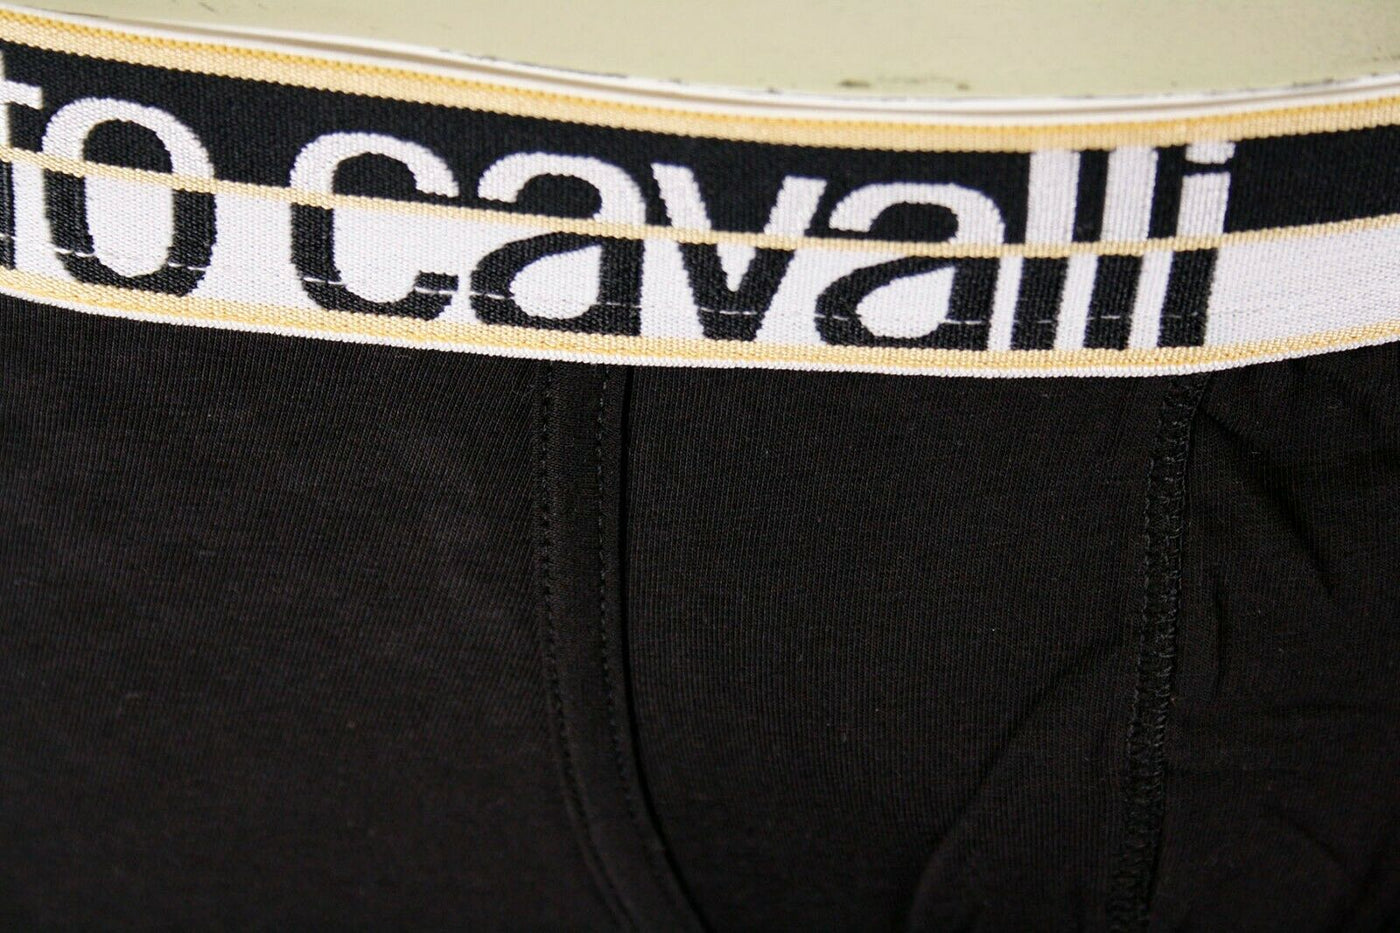 Roberto Cavalli Men's 2 Pack Black Stretch Boxer Briefs